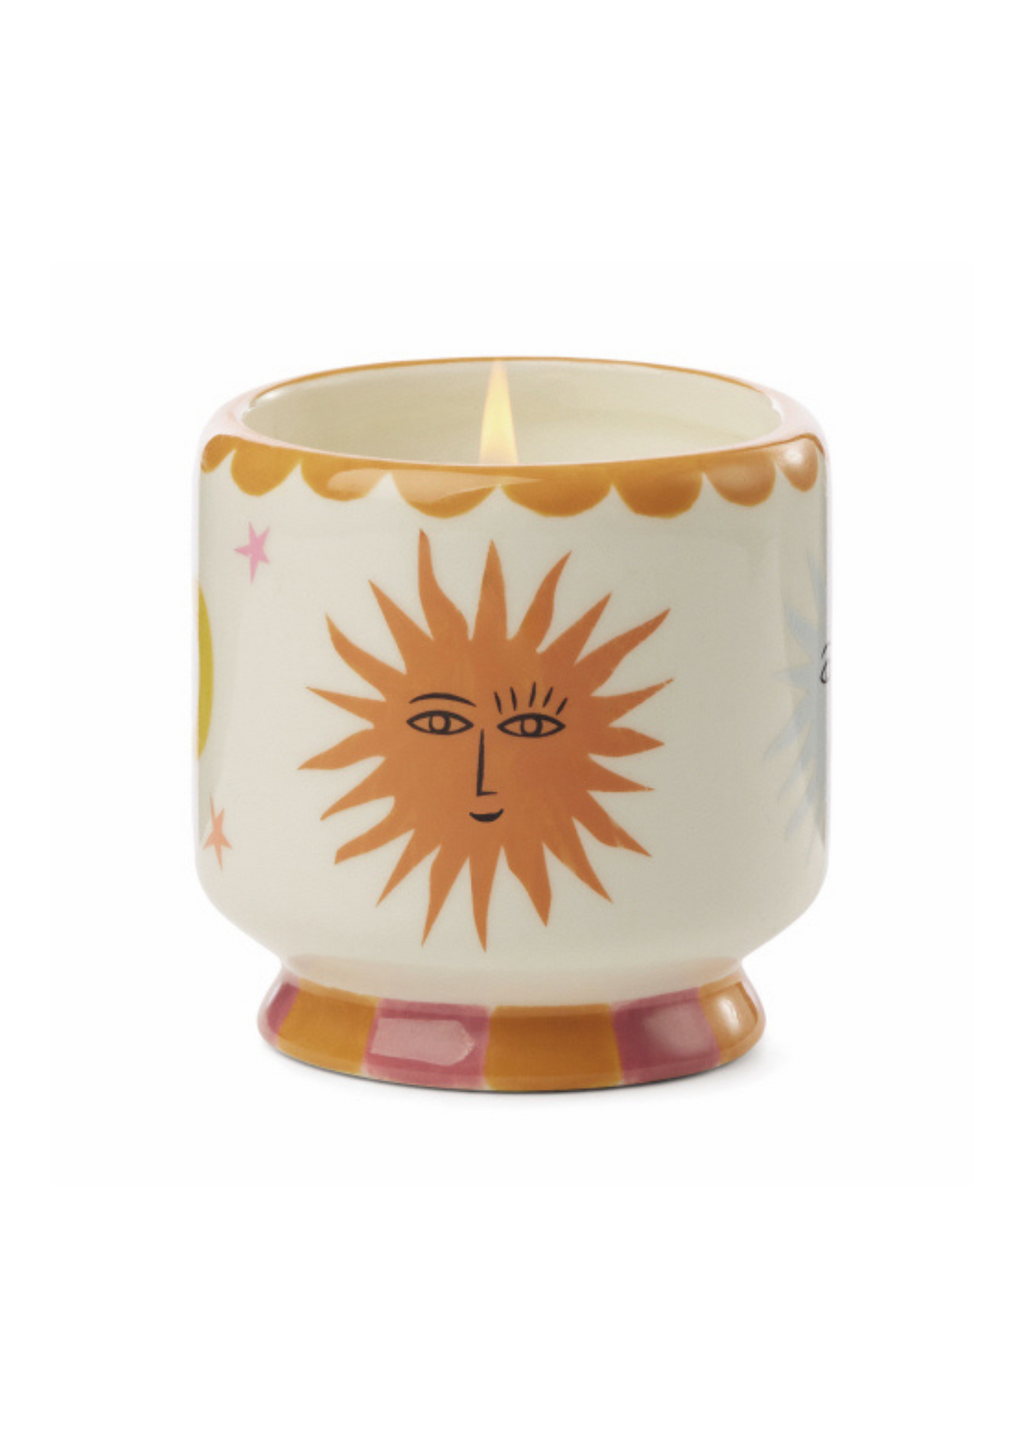 Ceramic Candle - "The Sun"